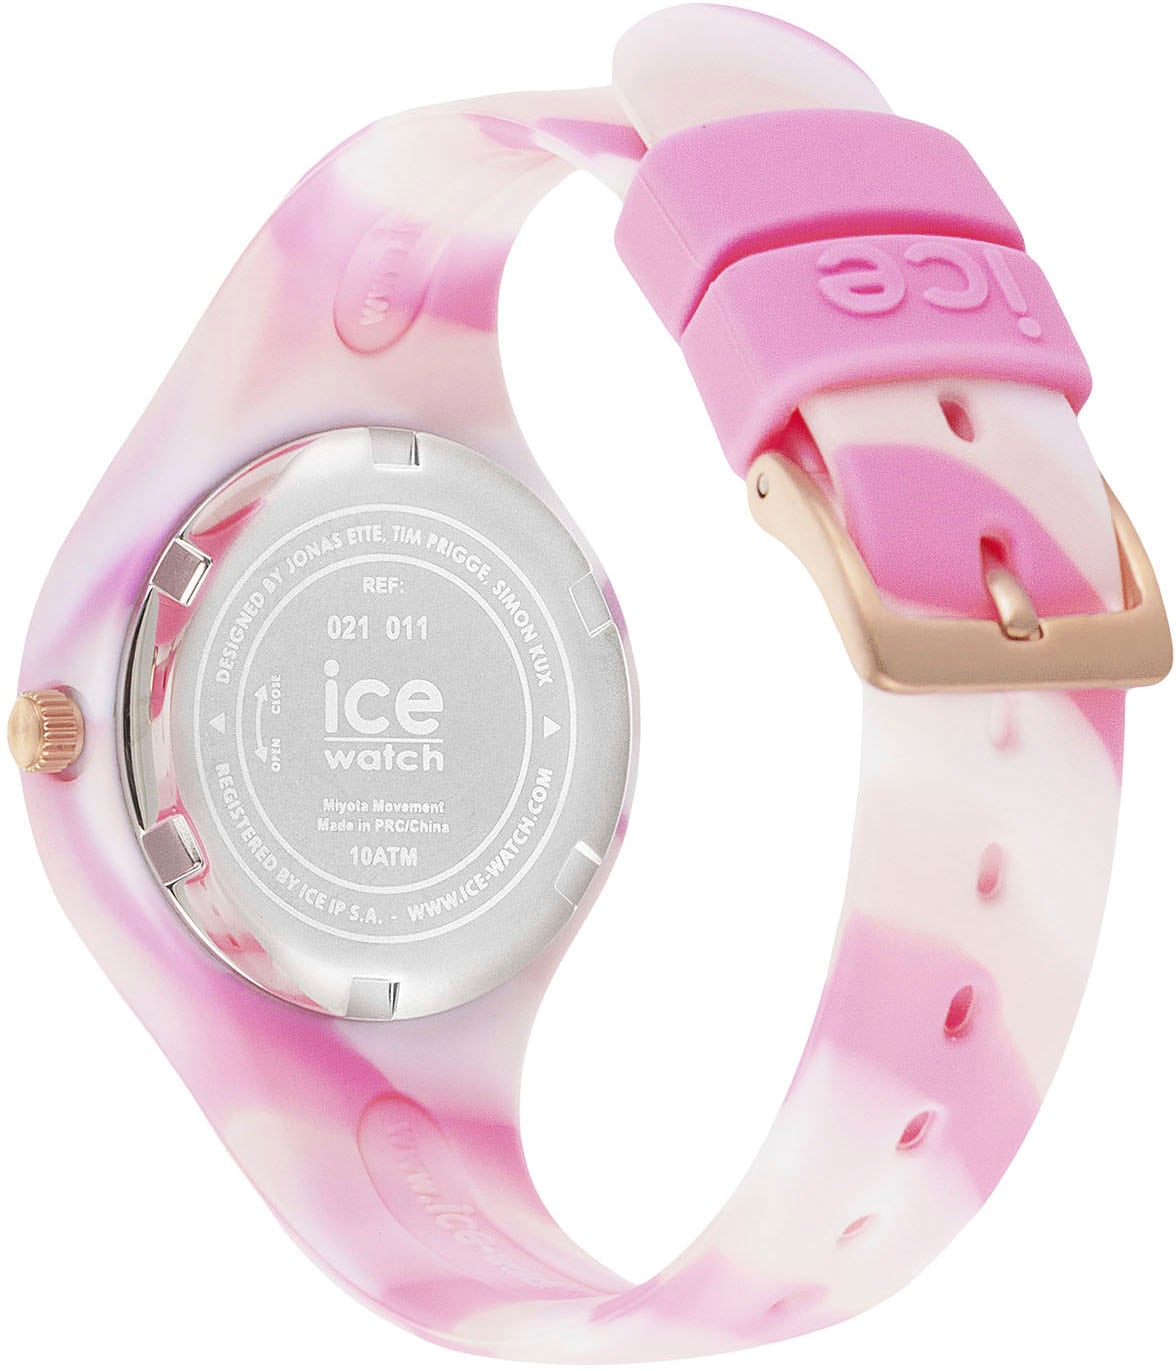 021011«, Geschenk - bei auch ideal tie Pink als ice-watch - - ♕ shades »ICE dye and 3H, Quarzuhr Extra-Small